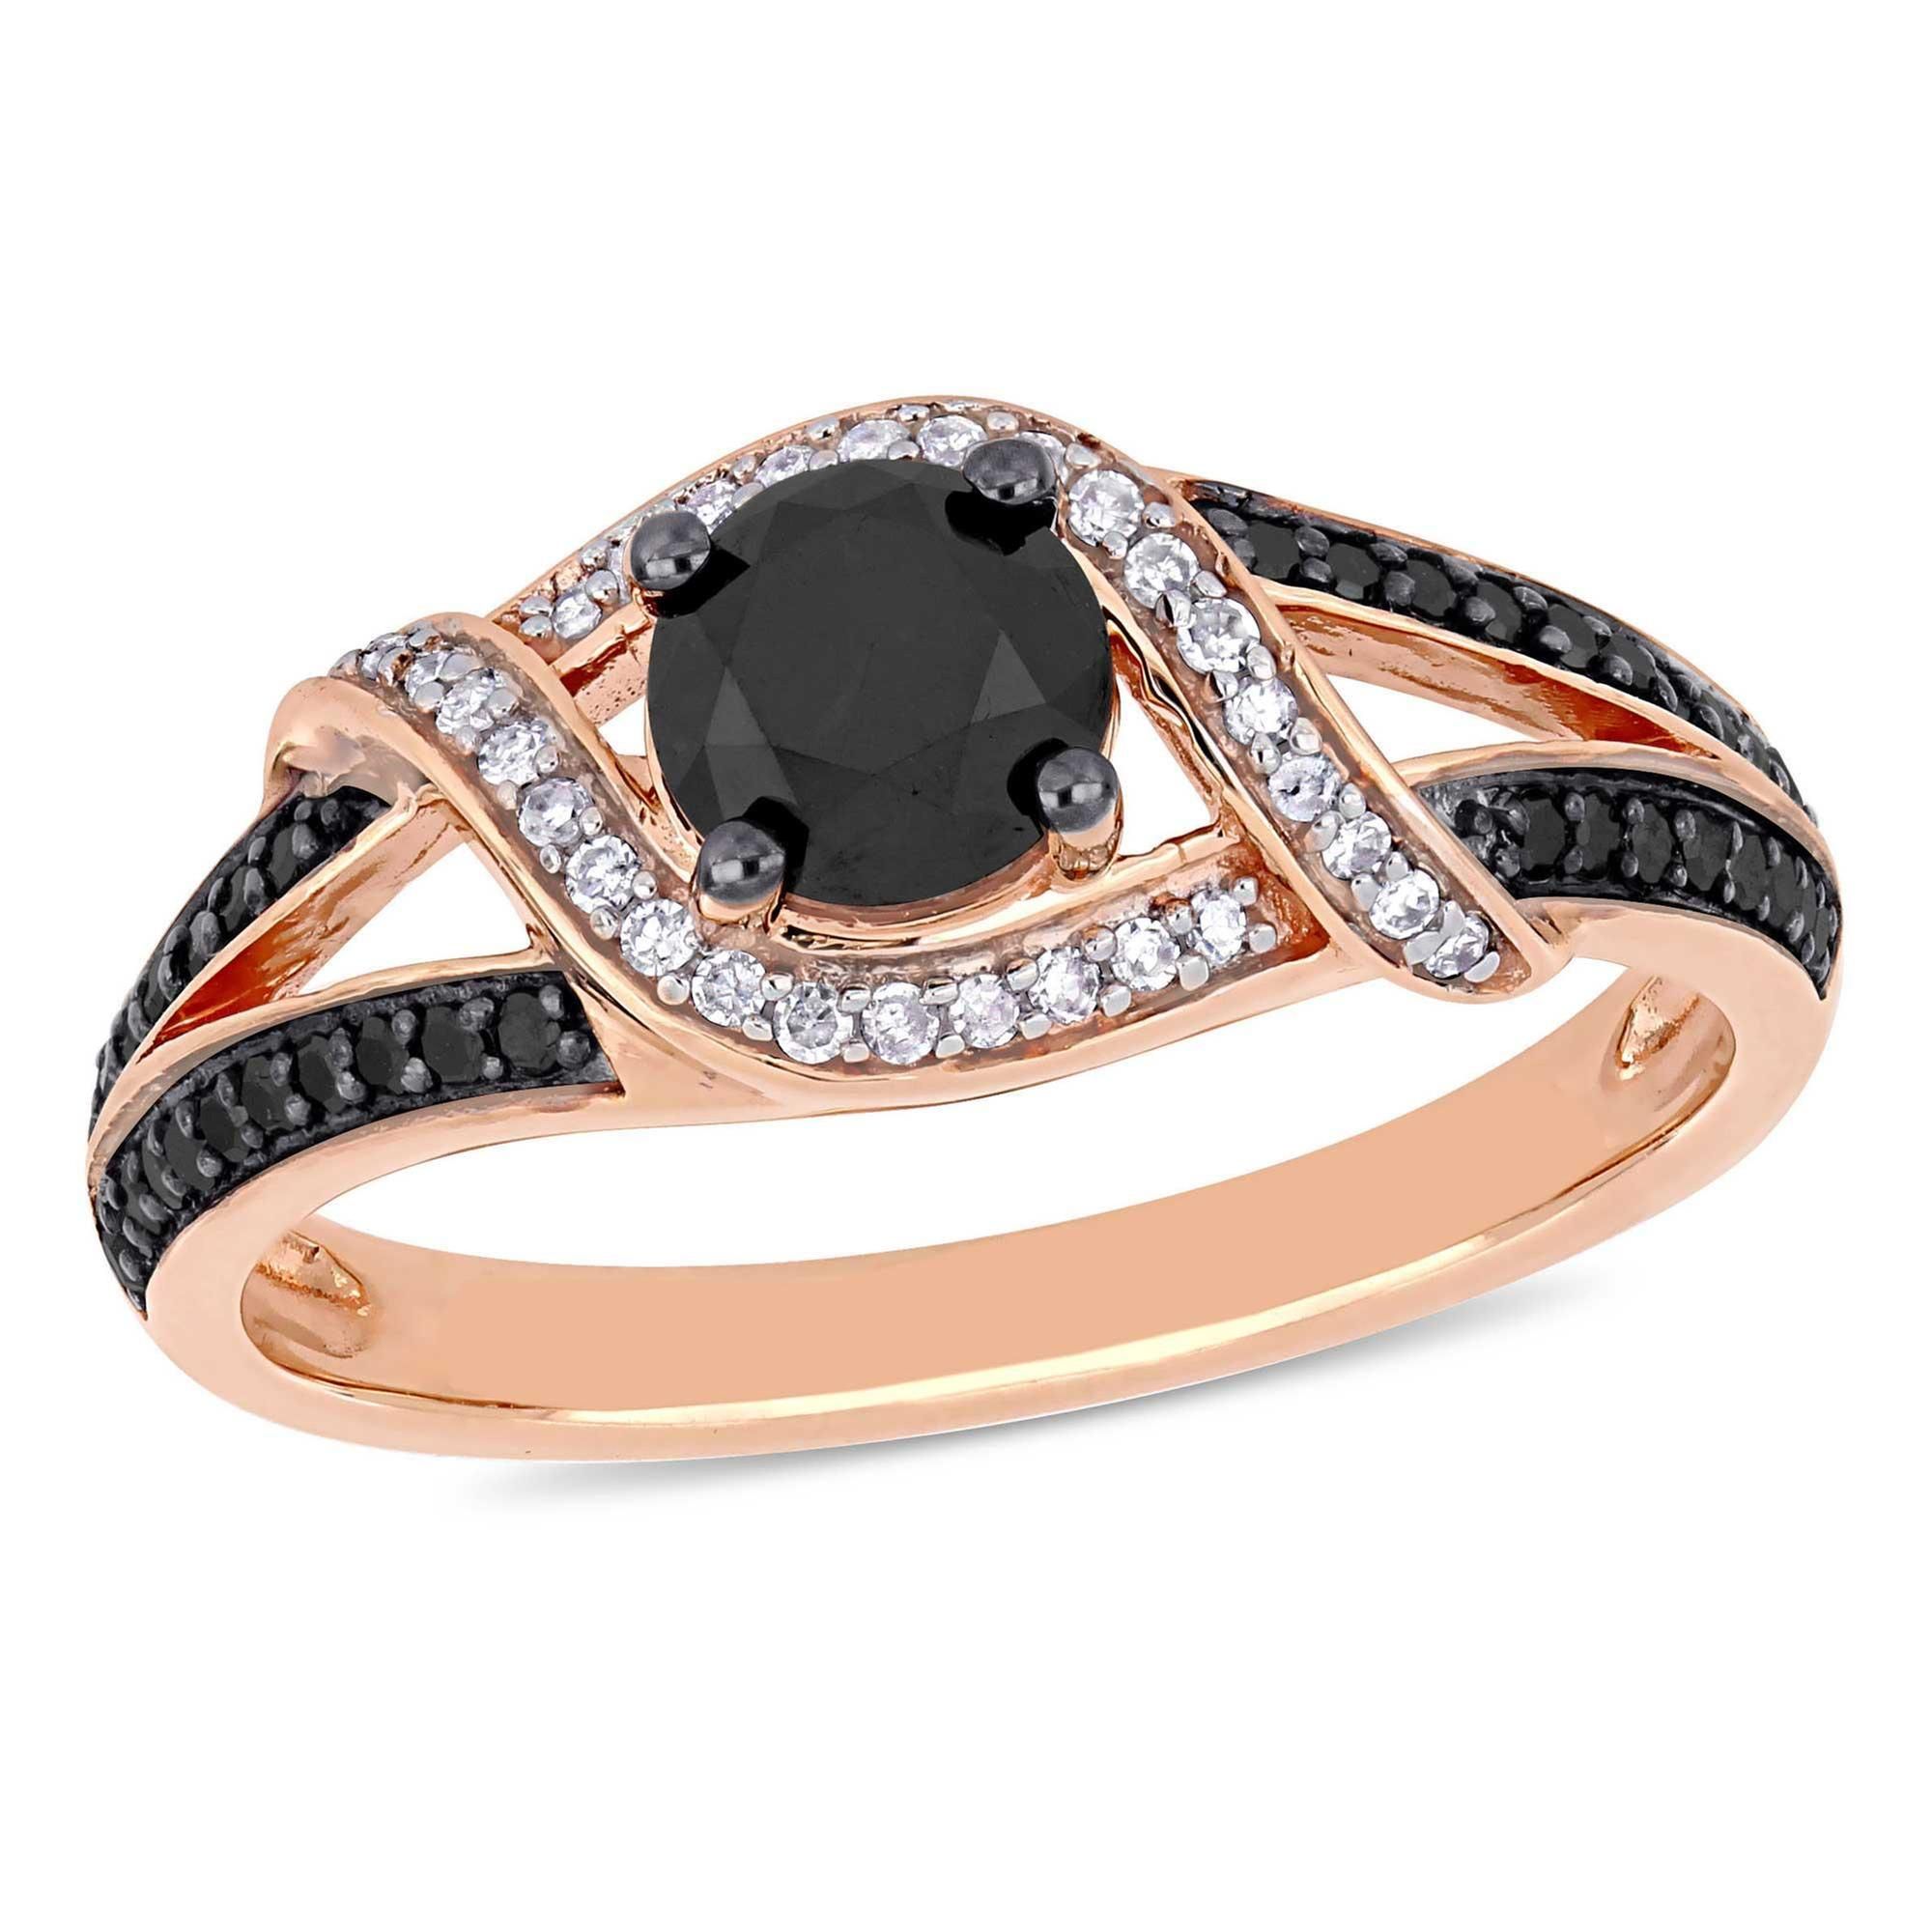 1ctw Black Diamond and Diamond Swirl Rose Gold Engagement Ring - Size 5.5